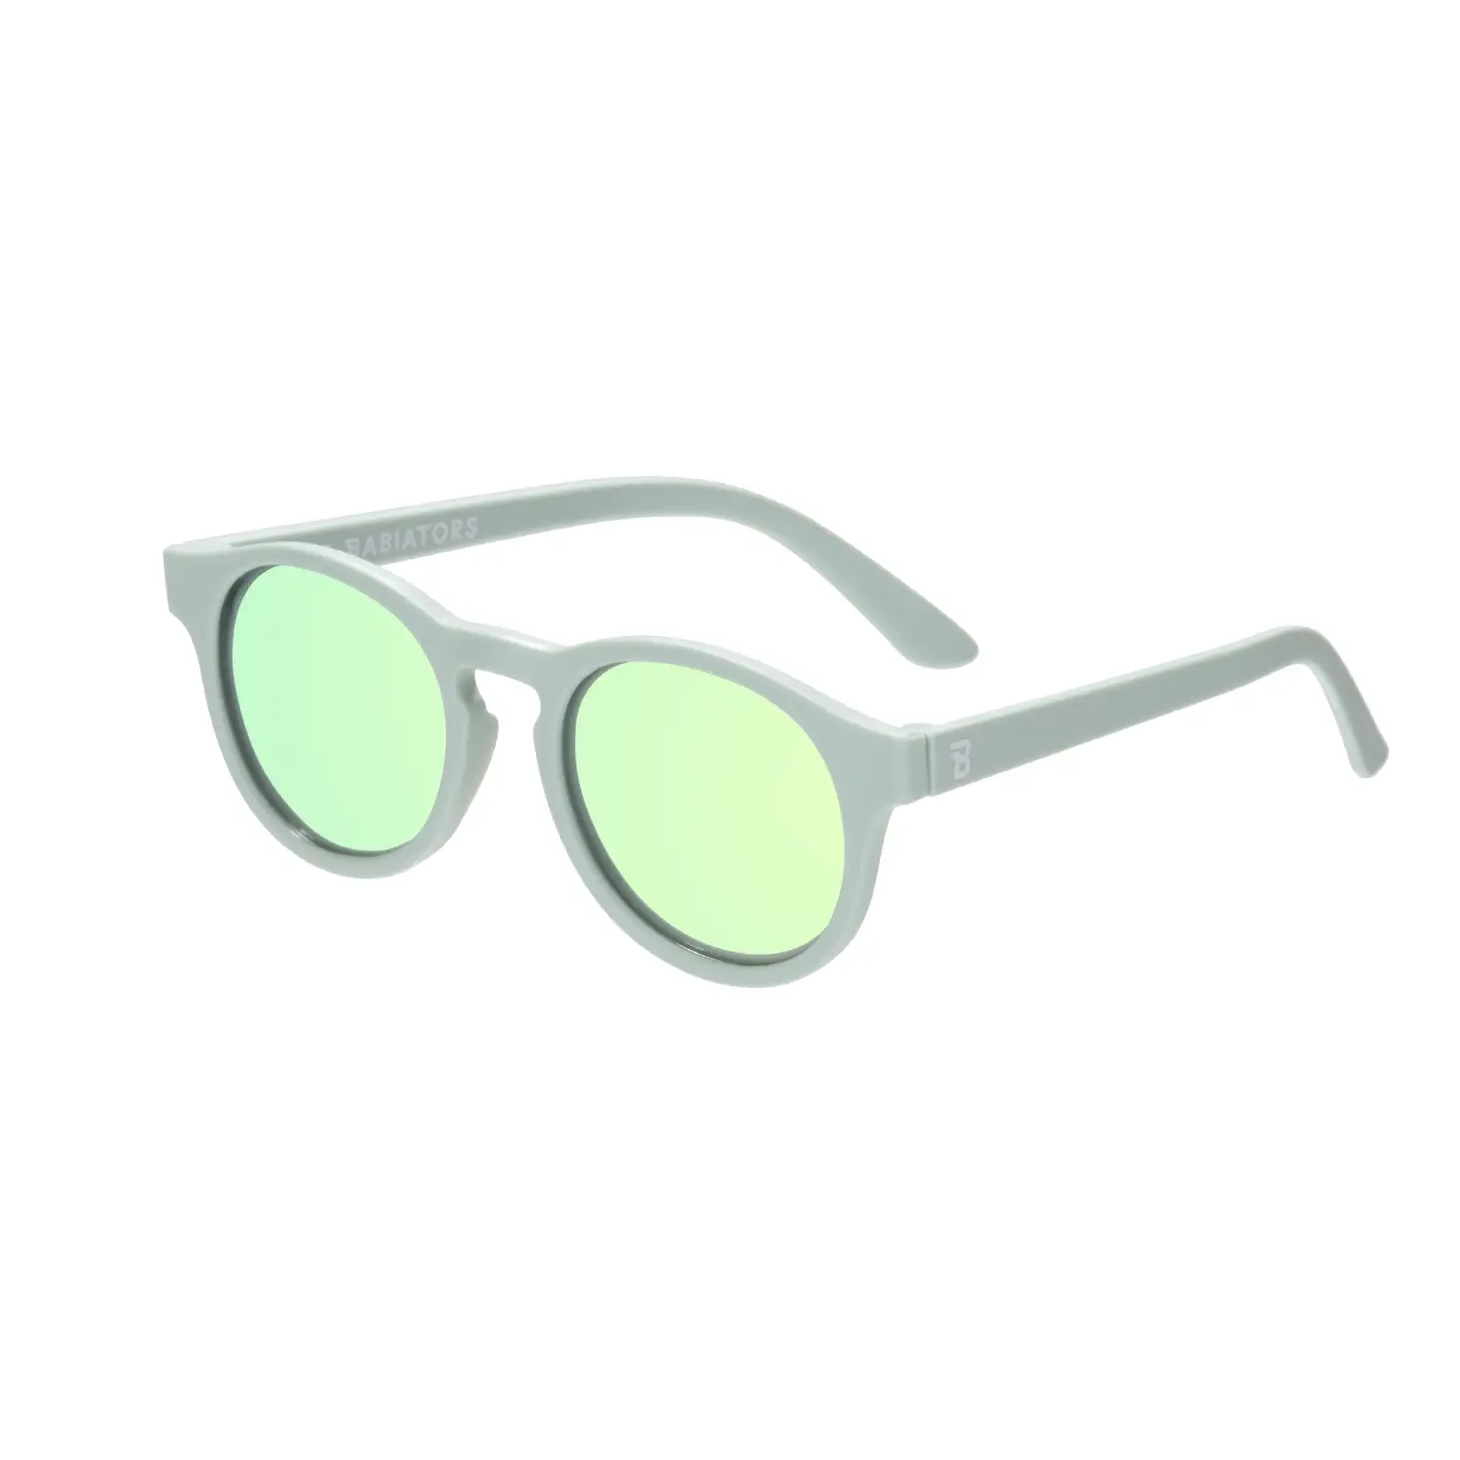 Babiators Babiators Polarized Keyhole Sunglasses: Seafoam Blue | Seafoam Blue Lens